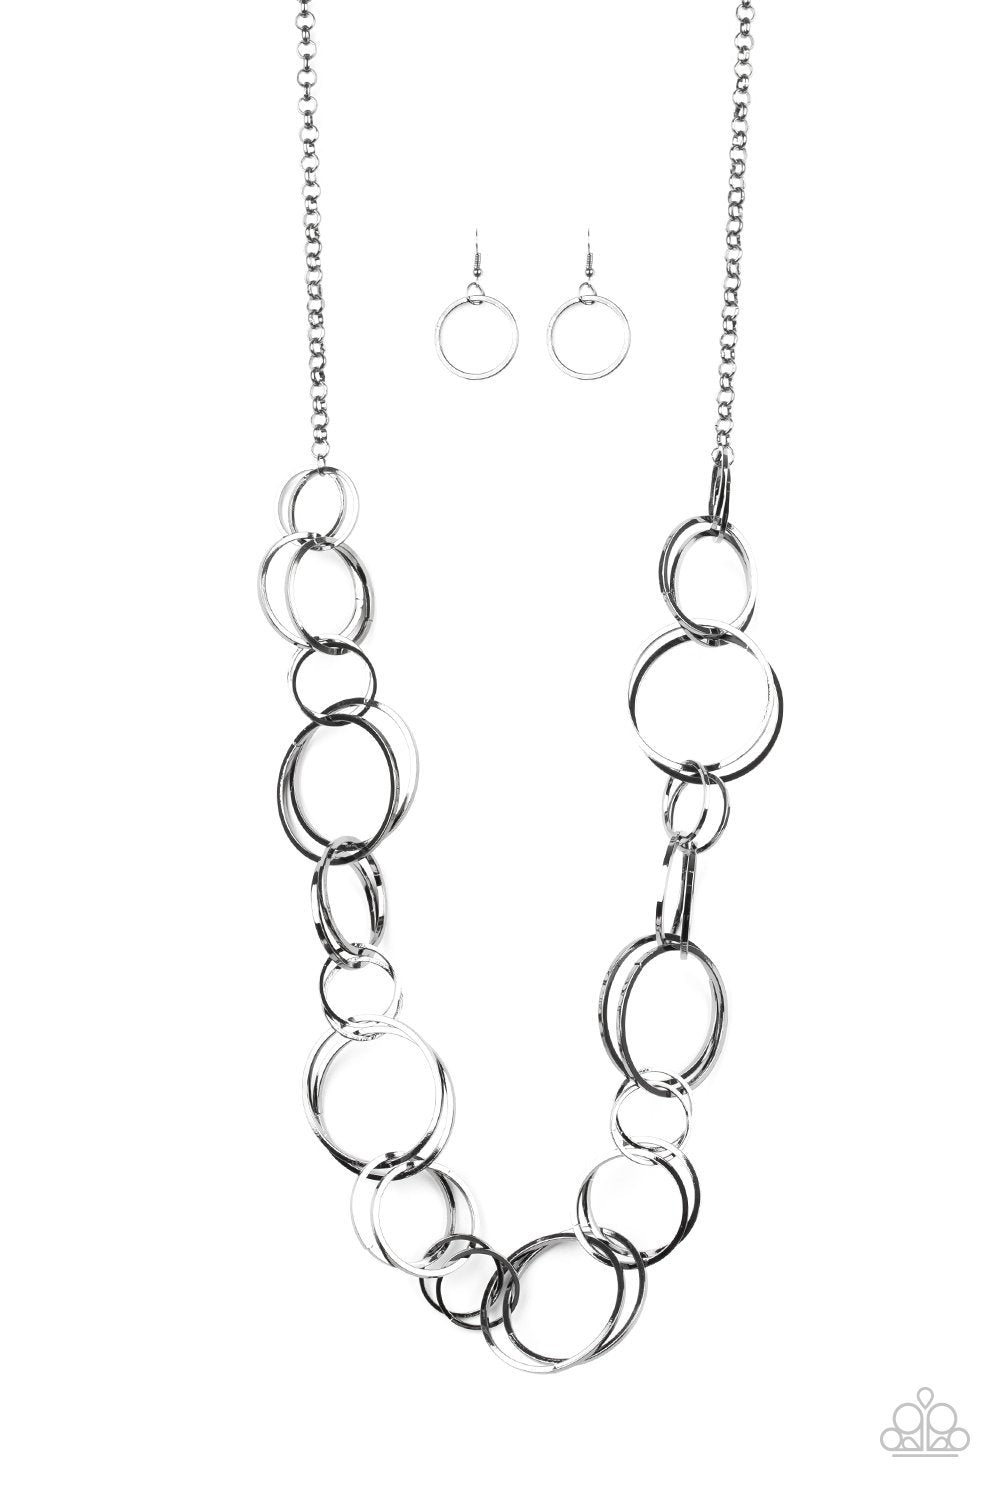 Natural-Born RINGLEADER Black Gunmetal Necklace - Paparazzi Accessories-CarasShop.com - $5 Jewelry by Cara Jewels